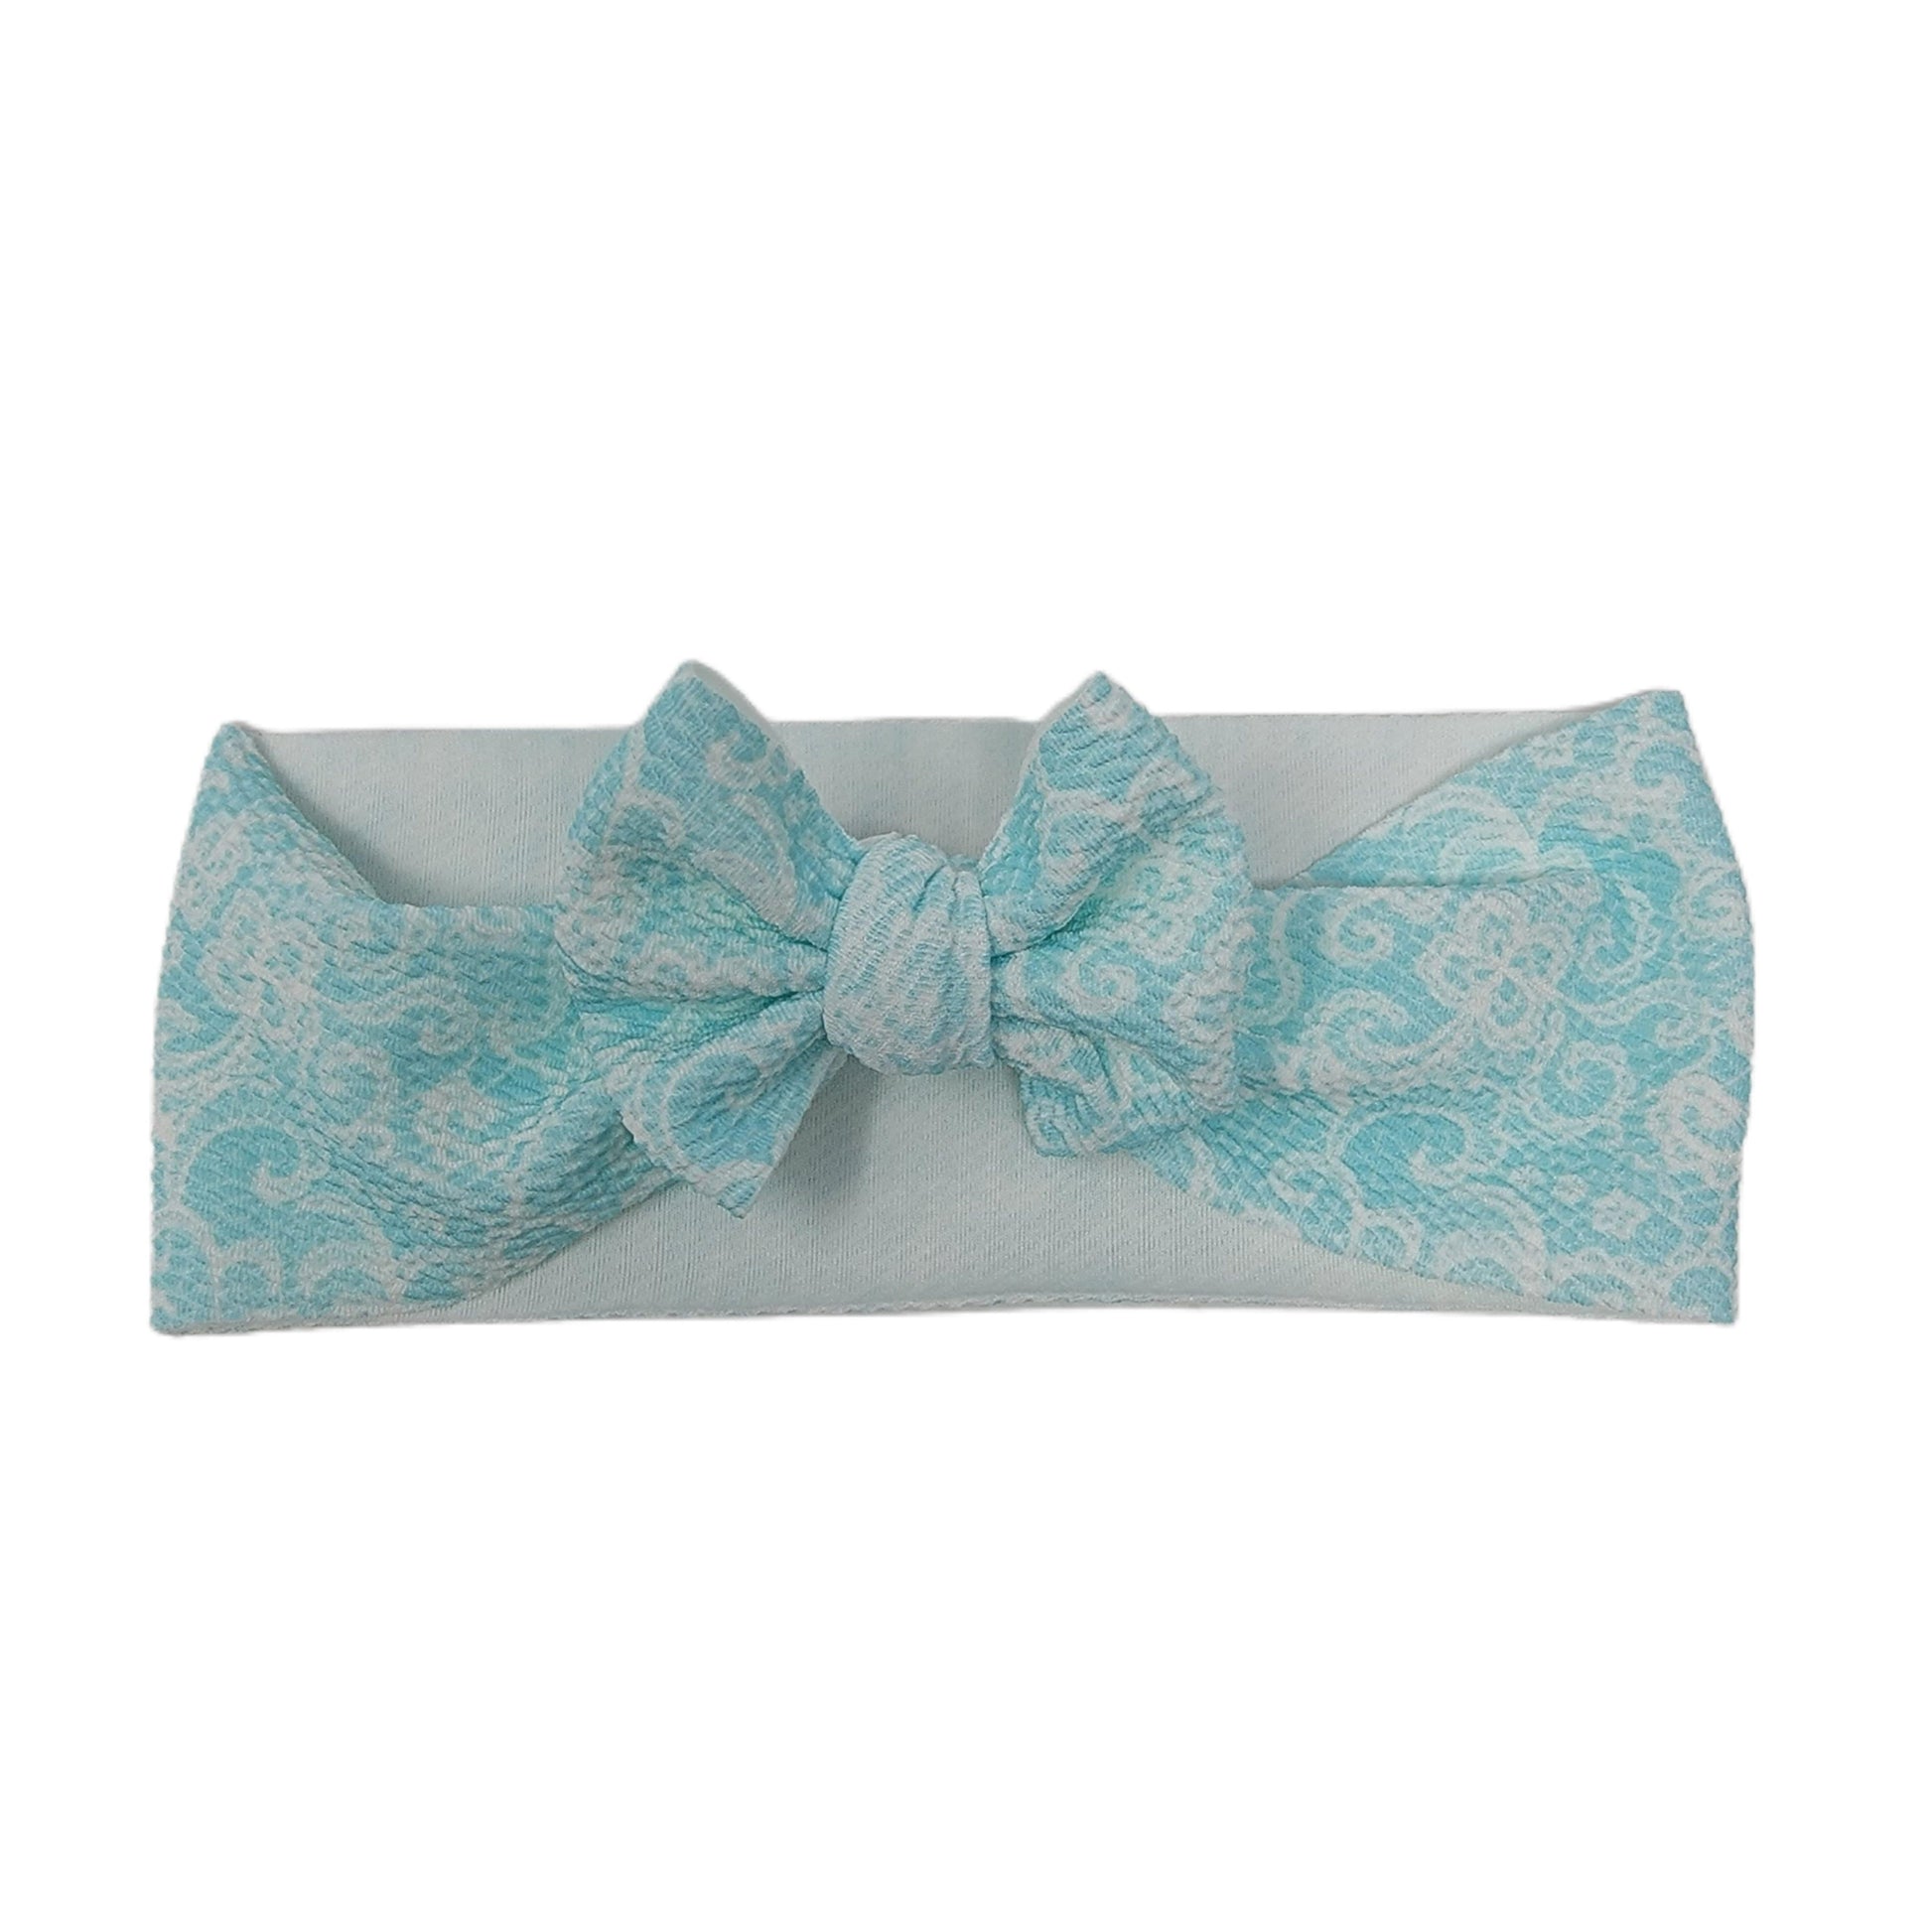 3" Seafoam Lace Fabric Bow Headwrap